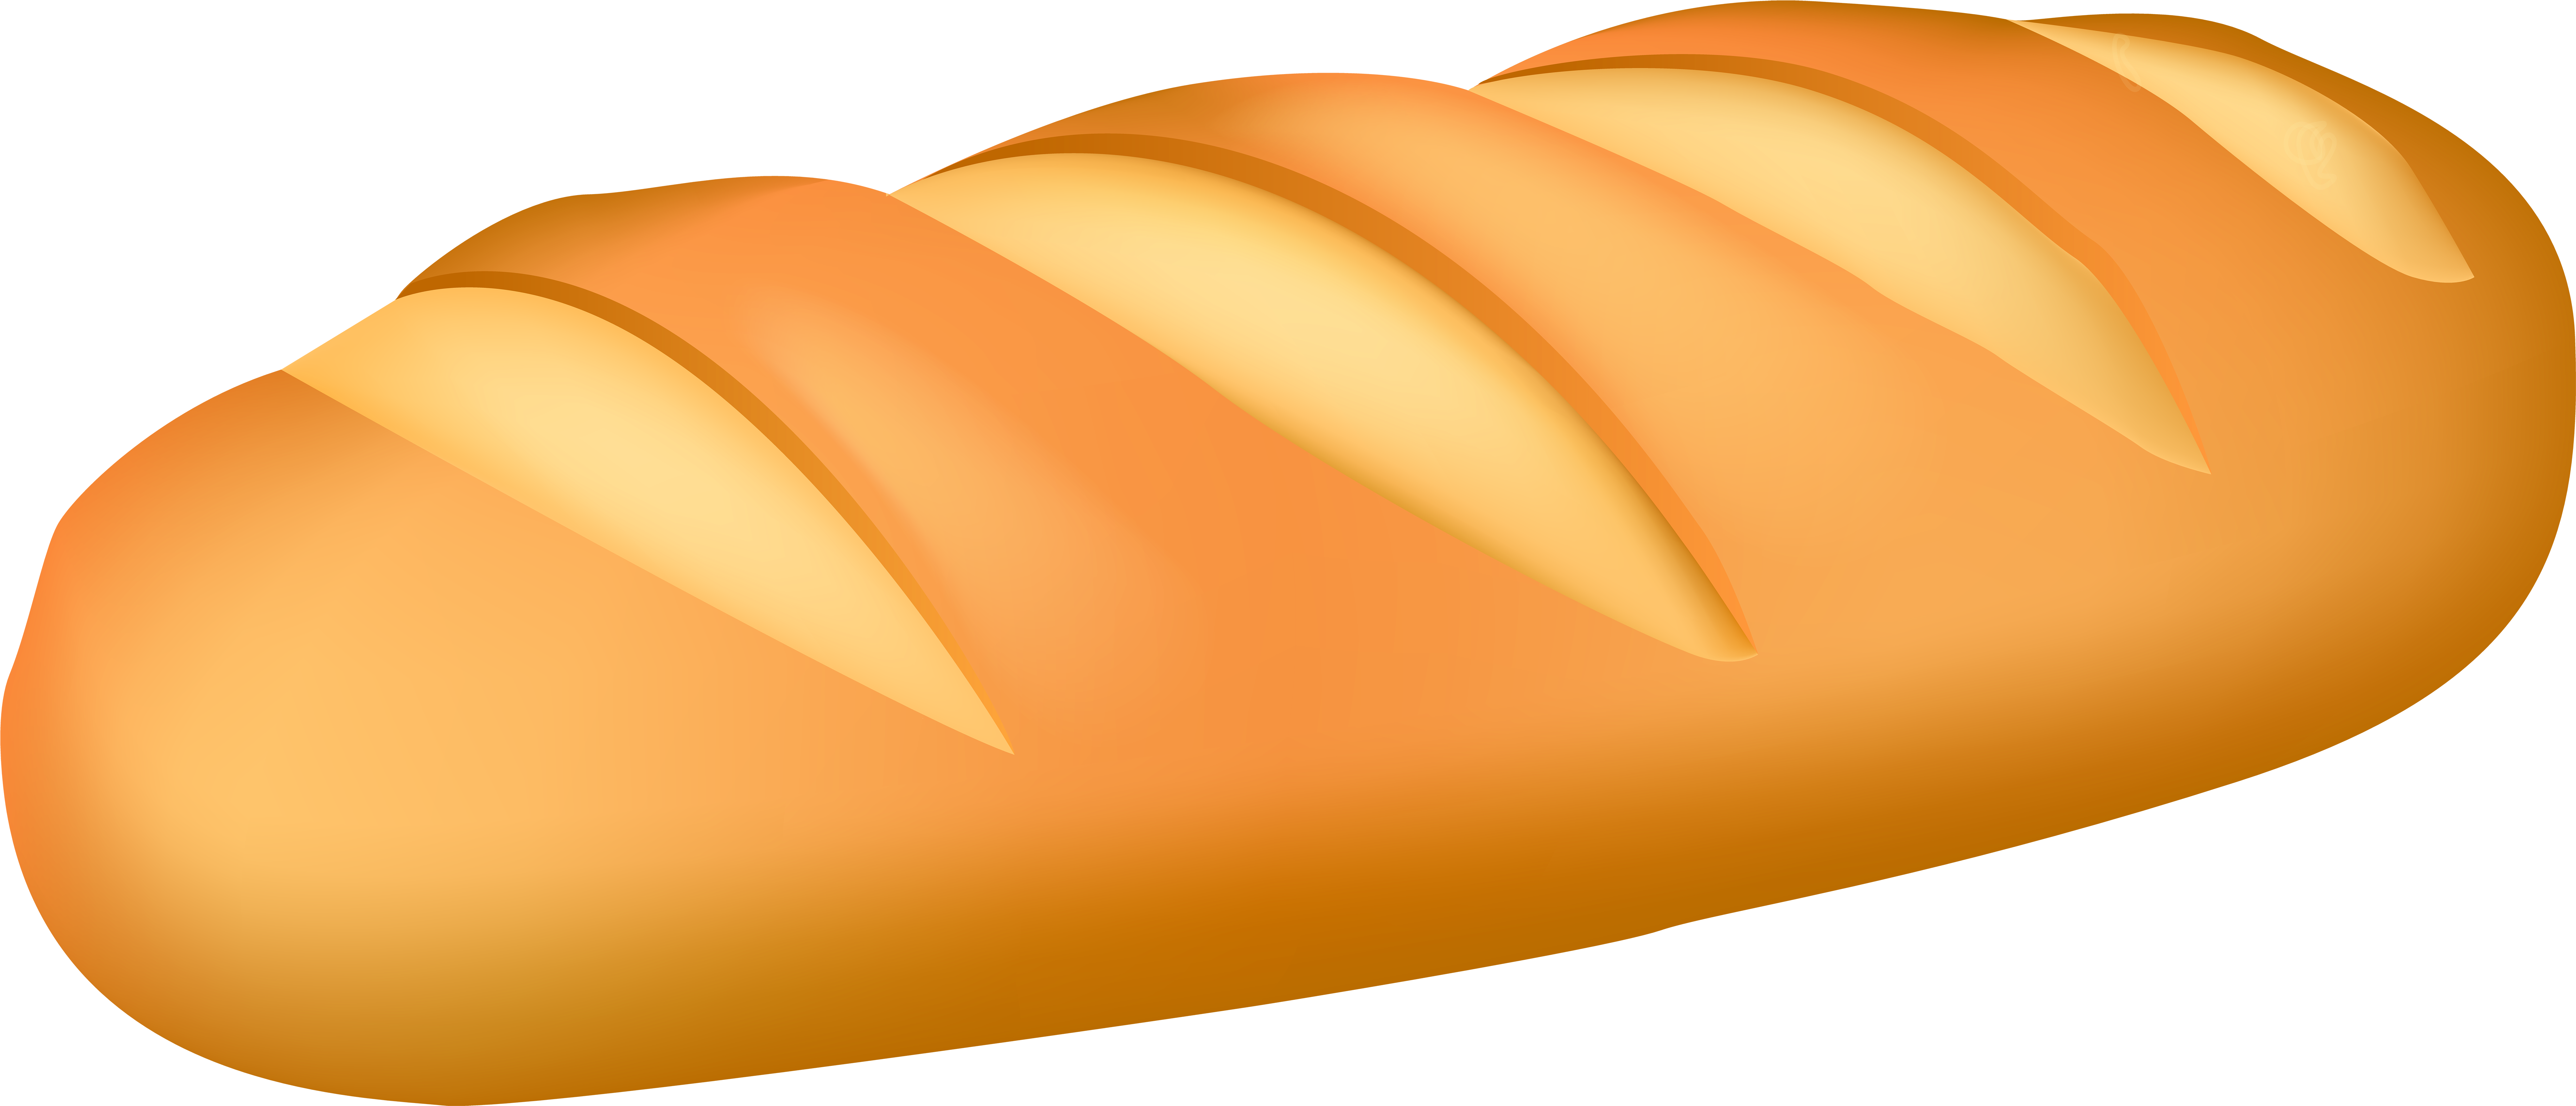 Golden Baked Baguette Illustration